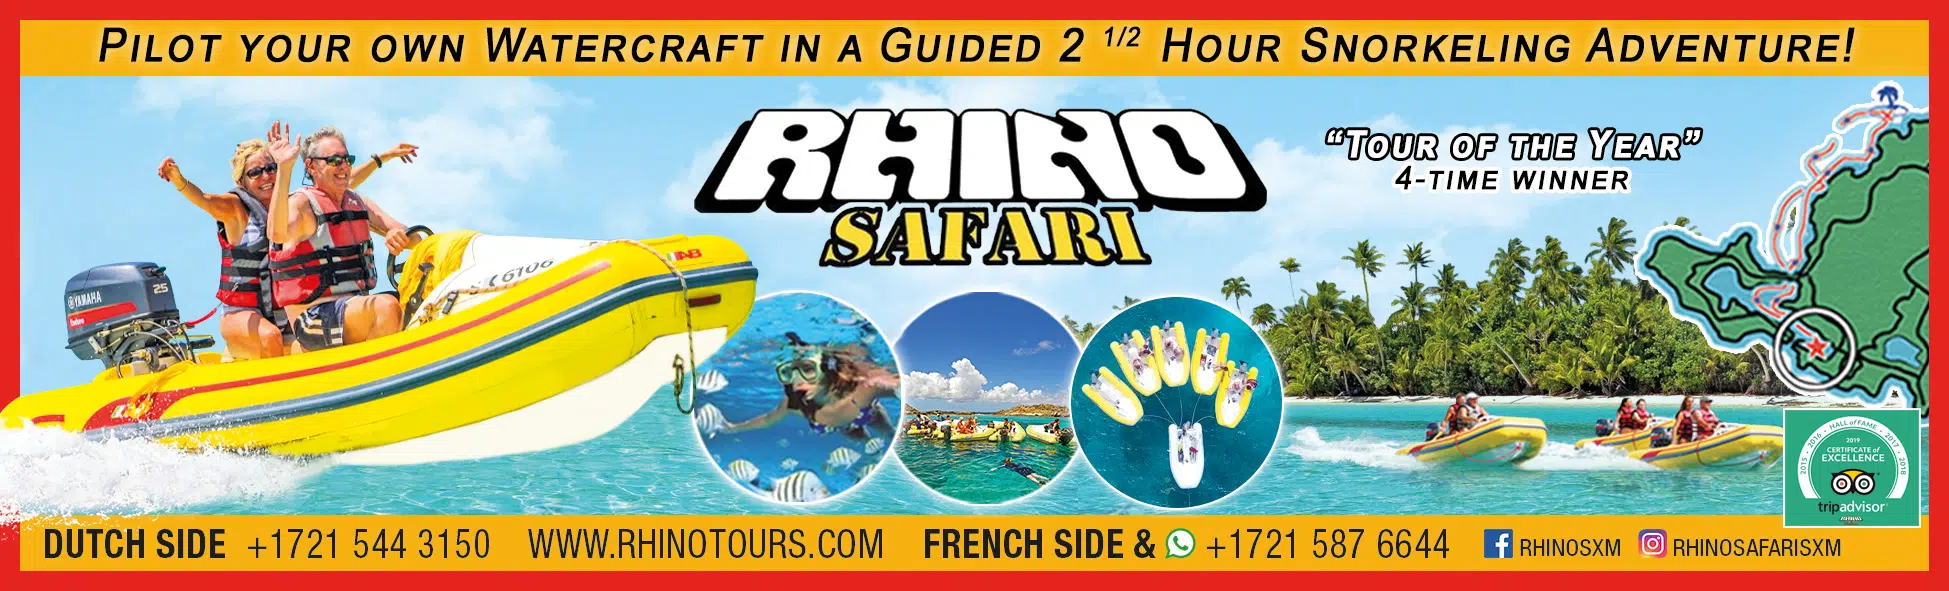 St Maarten Telephone Directory - Rhino Safari Tours